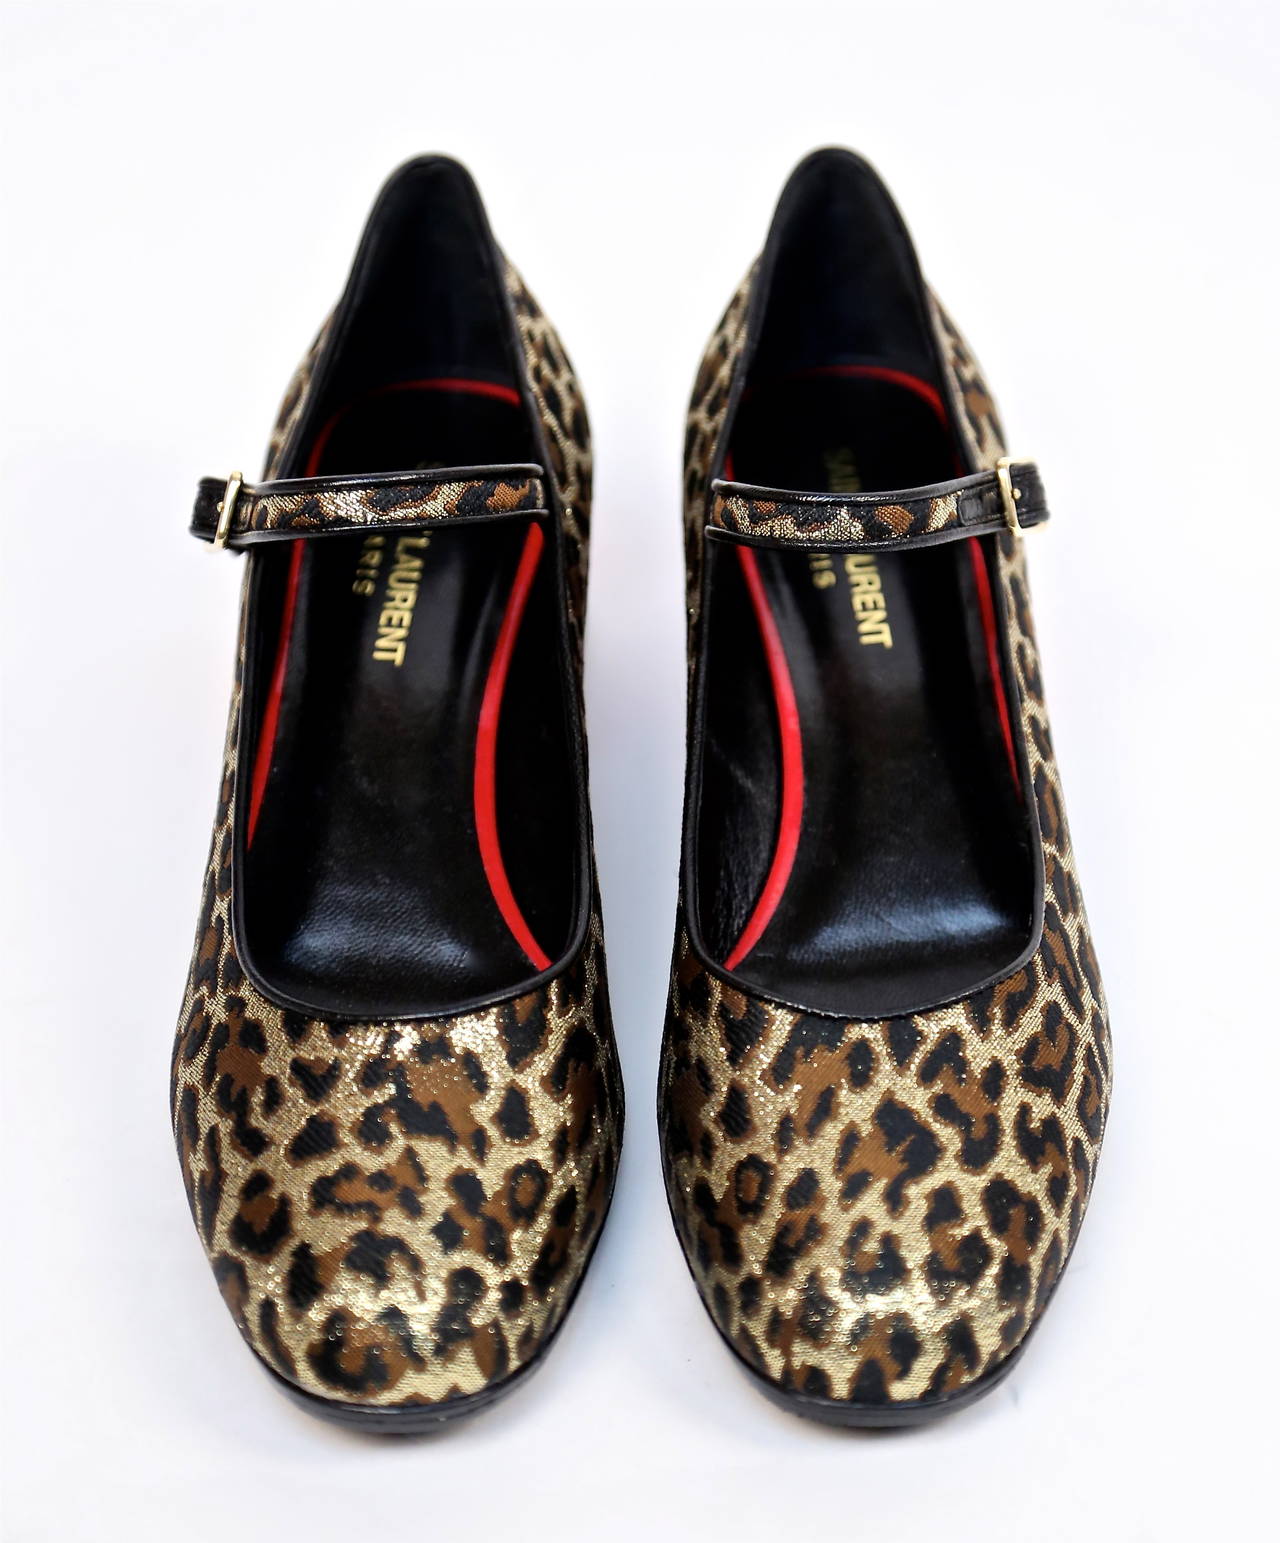 new SAINT LAURENT metallic woven leopard mary janes with red heels 38 ...